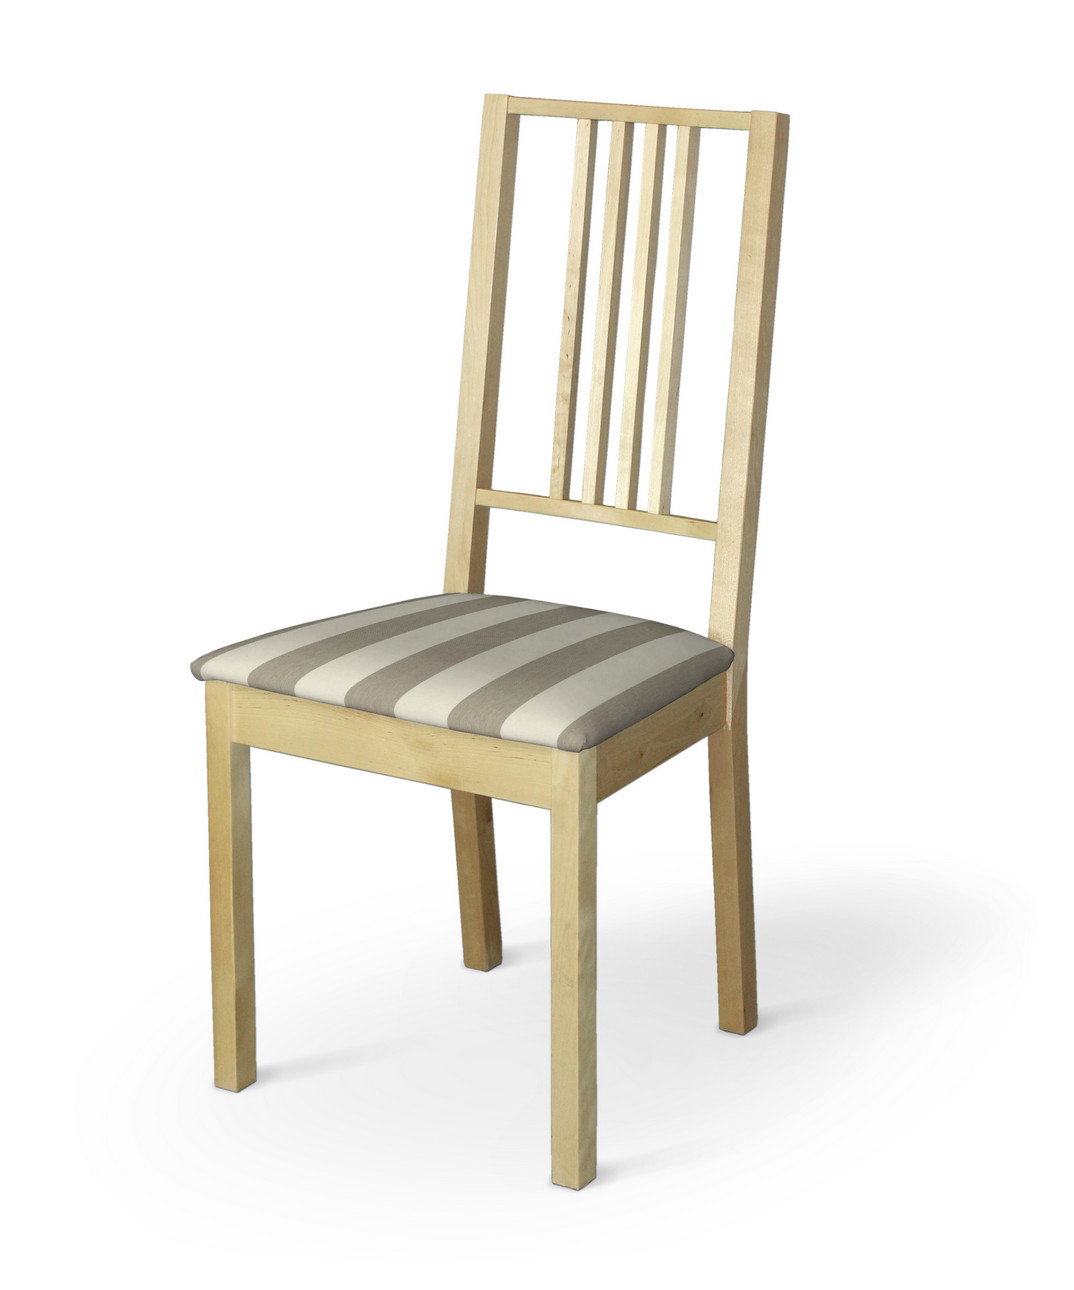 Dekoria Potah na sedák židle Börje, béžové a bílé svislé pruhy, potah sedák židle Börje, Quadro, 143-93